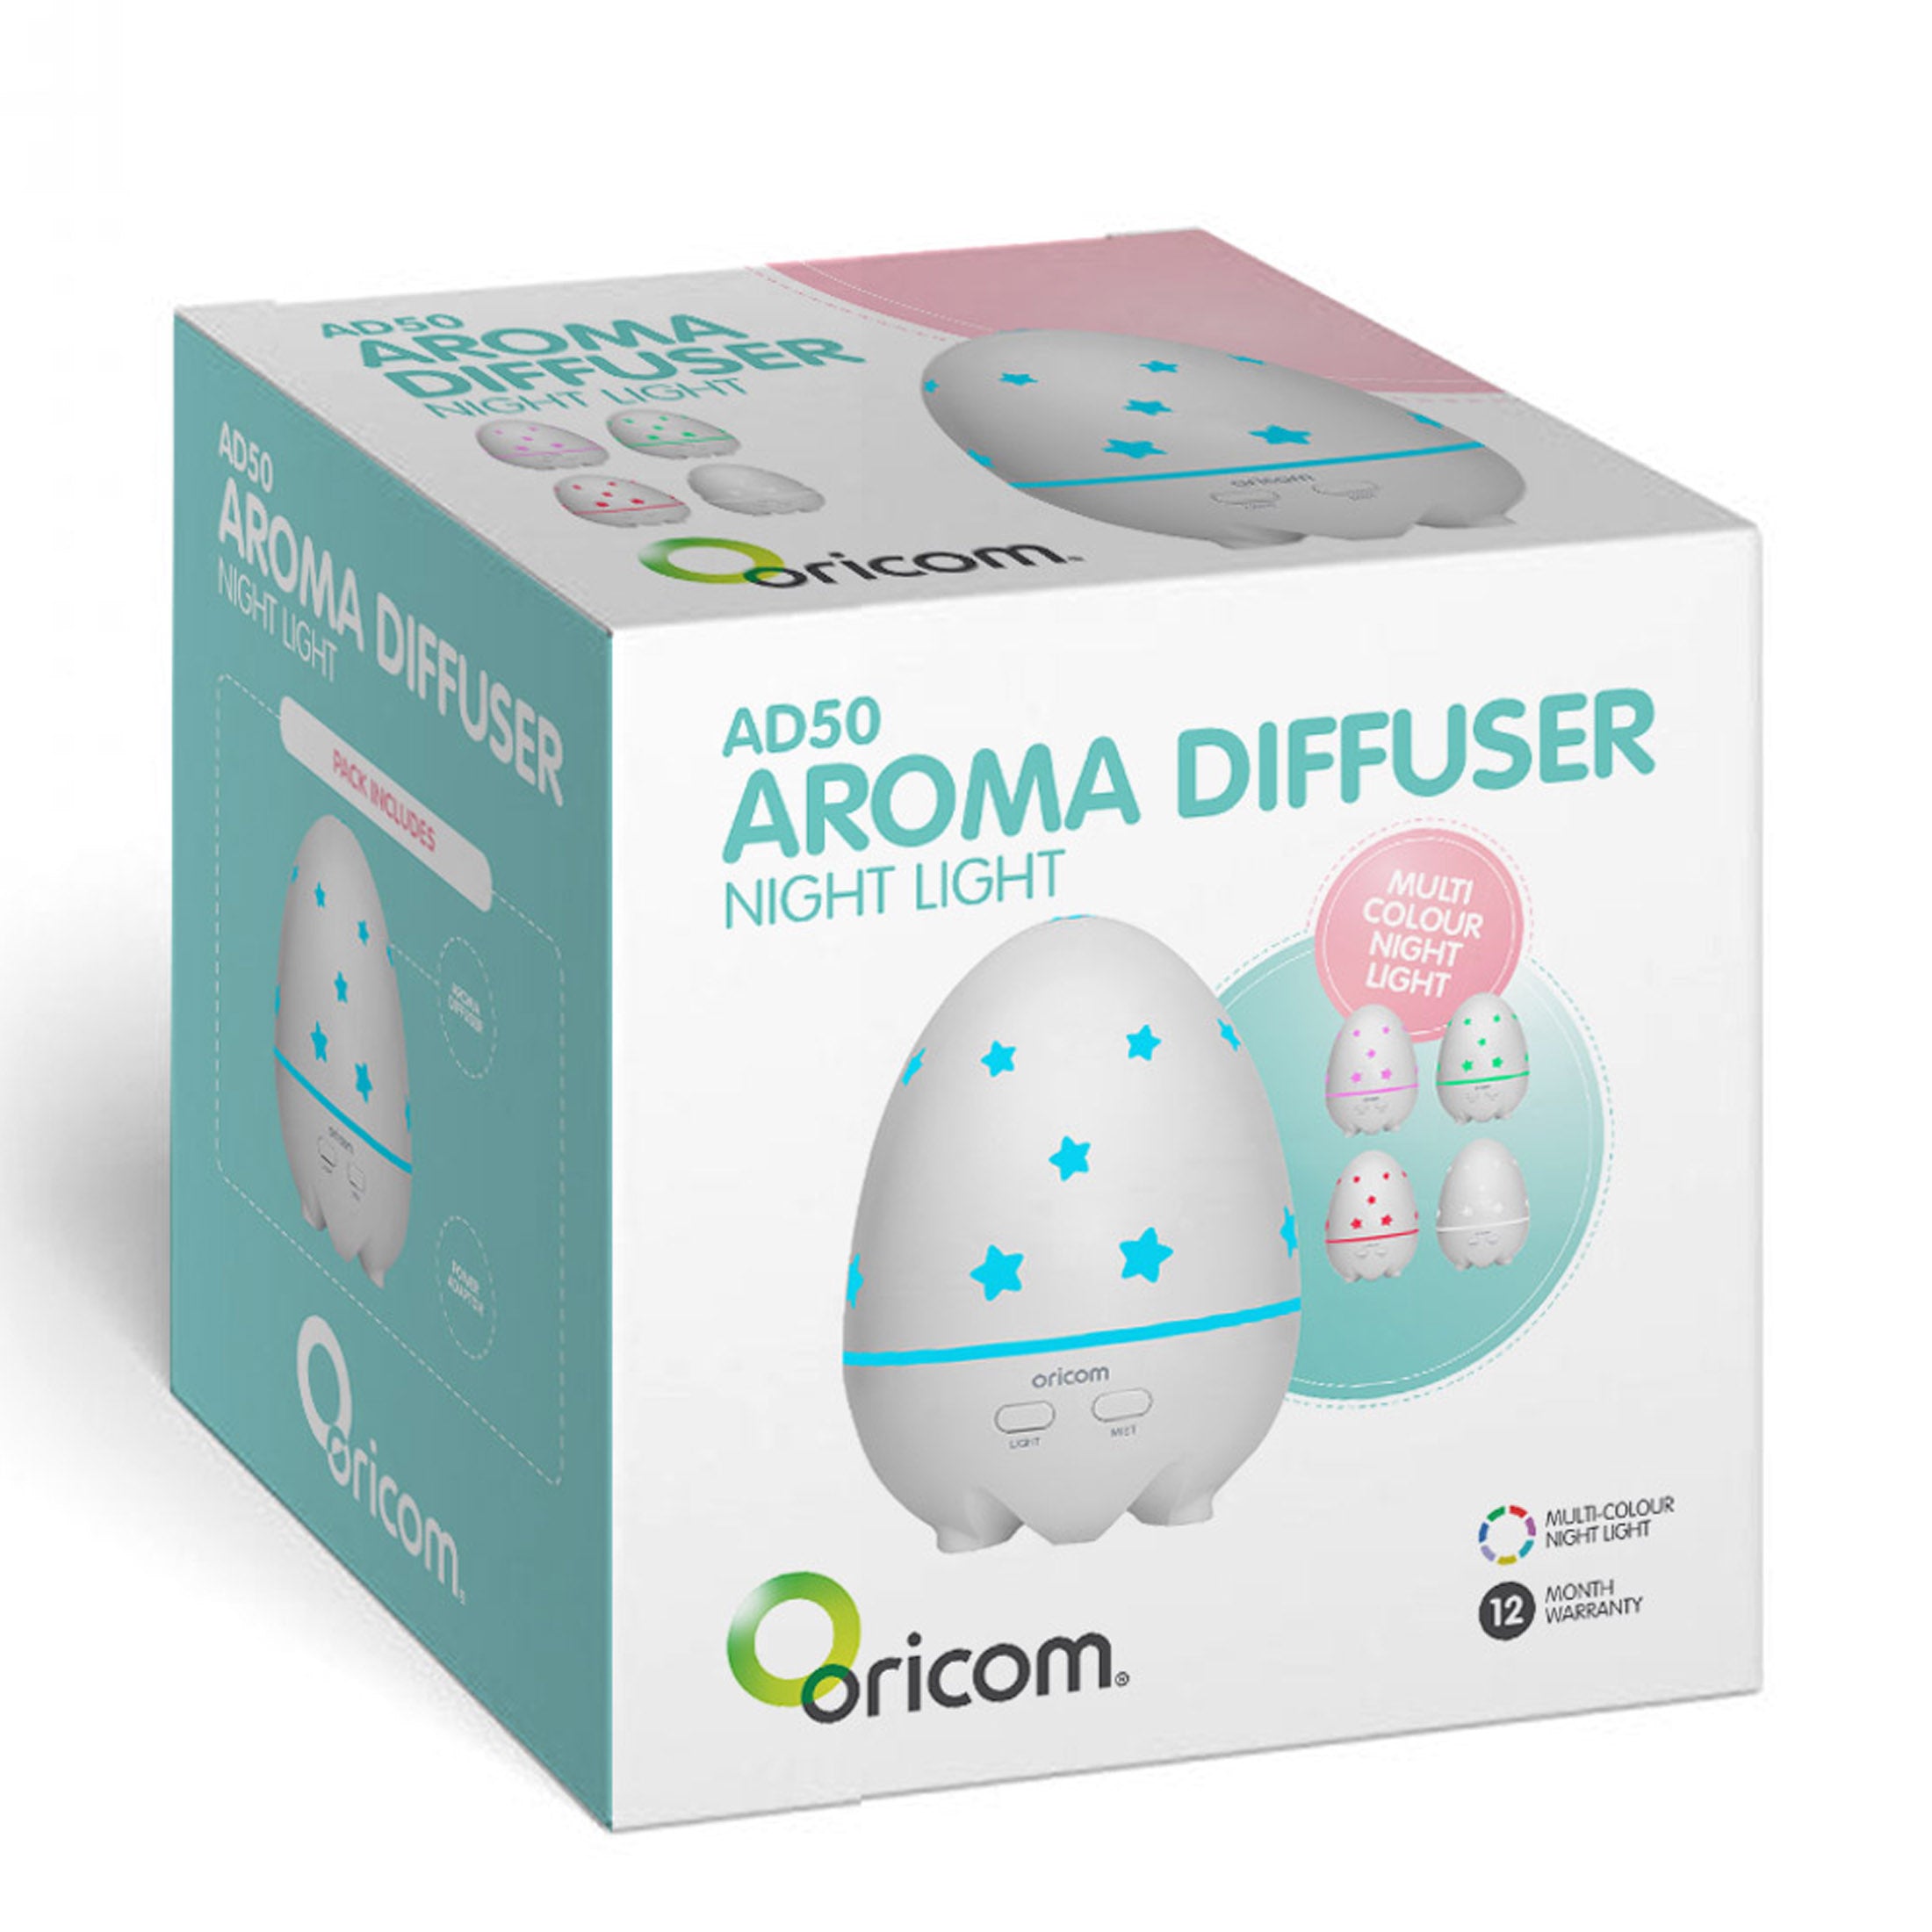 Oricom Aroma Diffuser Humidifier & Night Light Baby Kids Room AD50 - SILBERSHELL